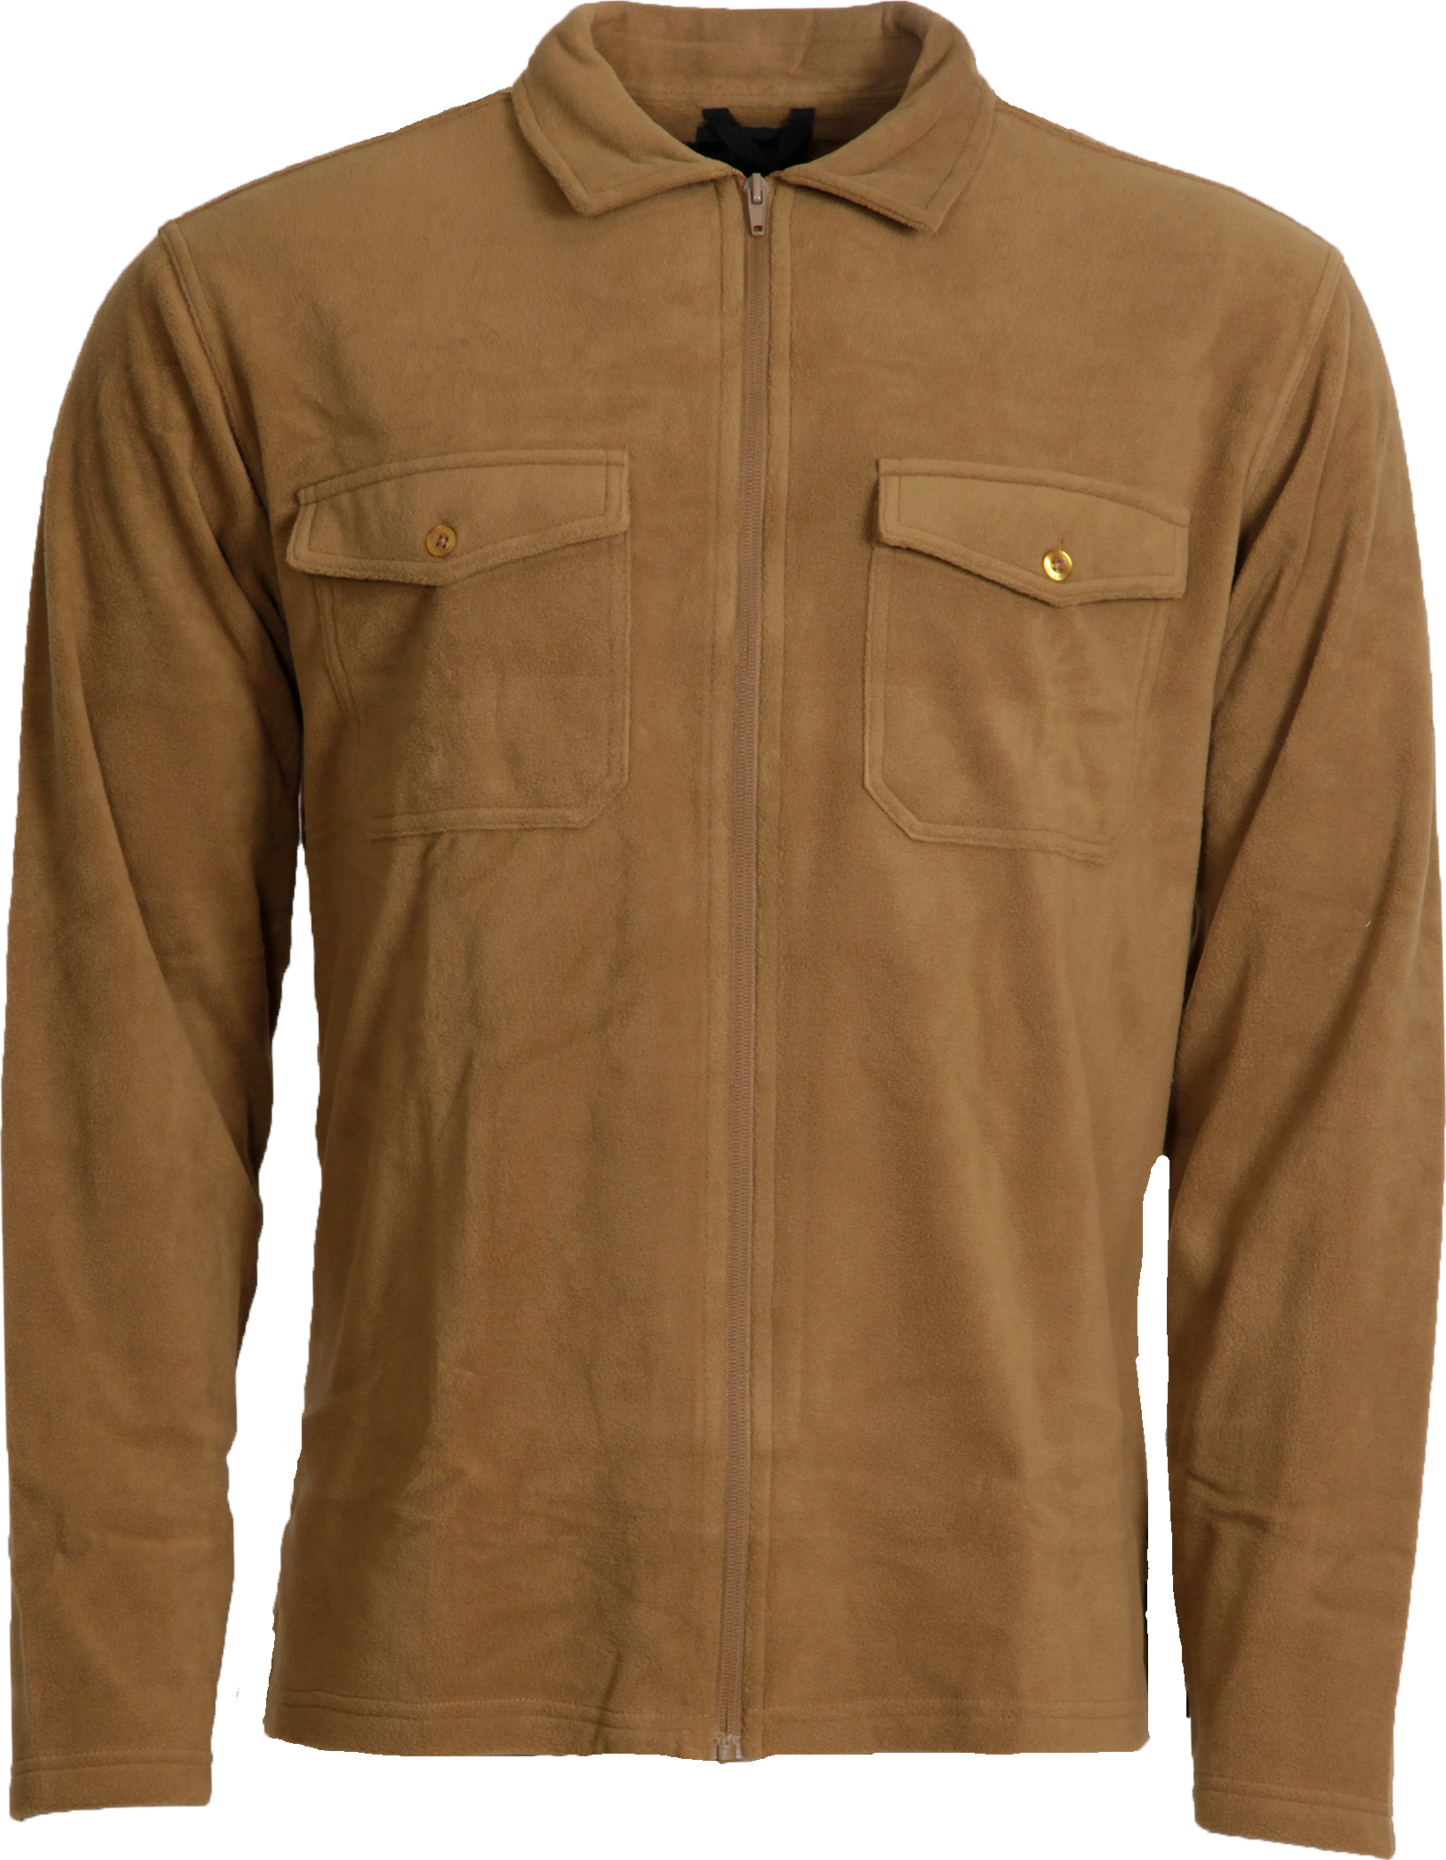 Dobsom Men's Pescara Fleece Shirt Brown XXXL, Brown